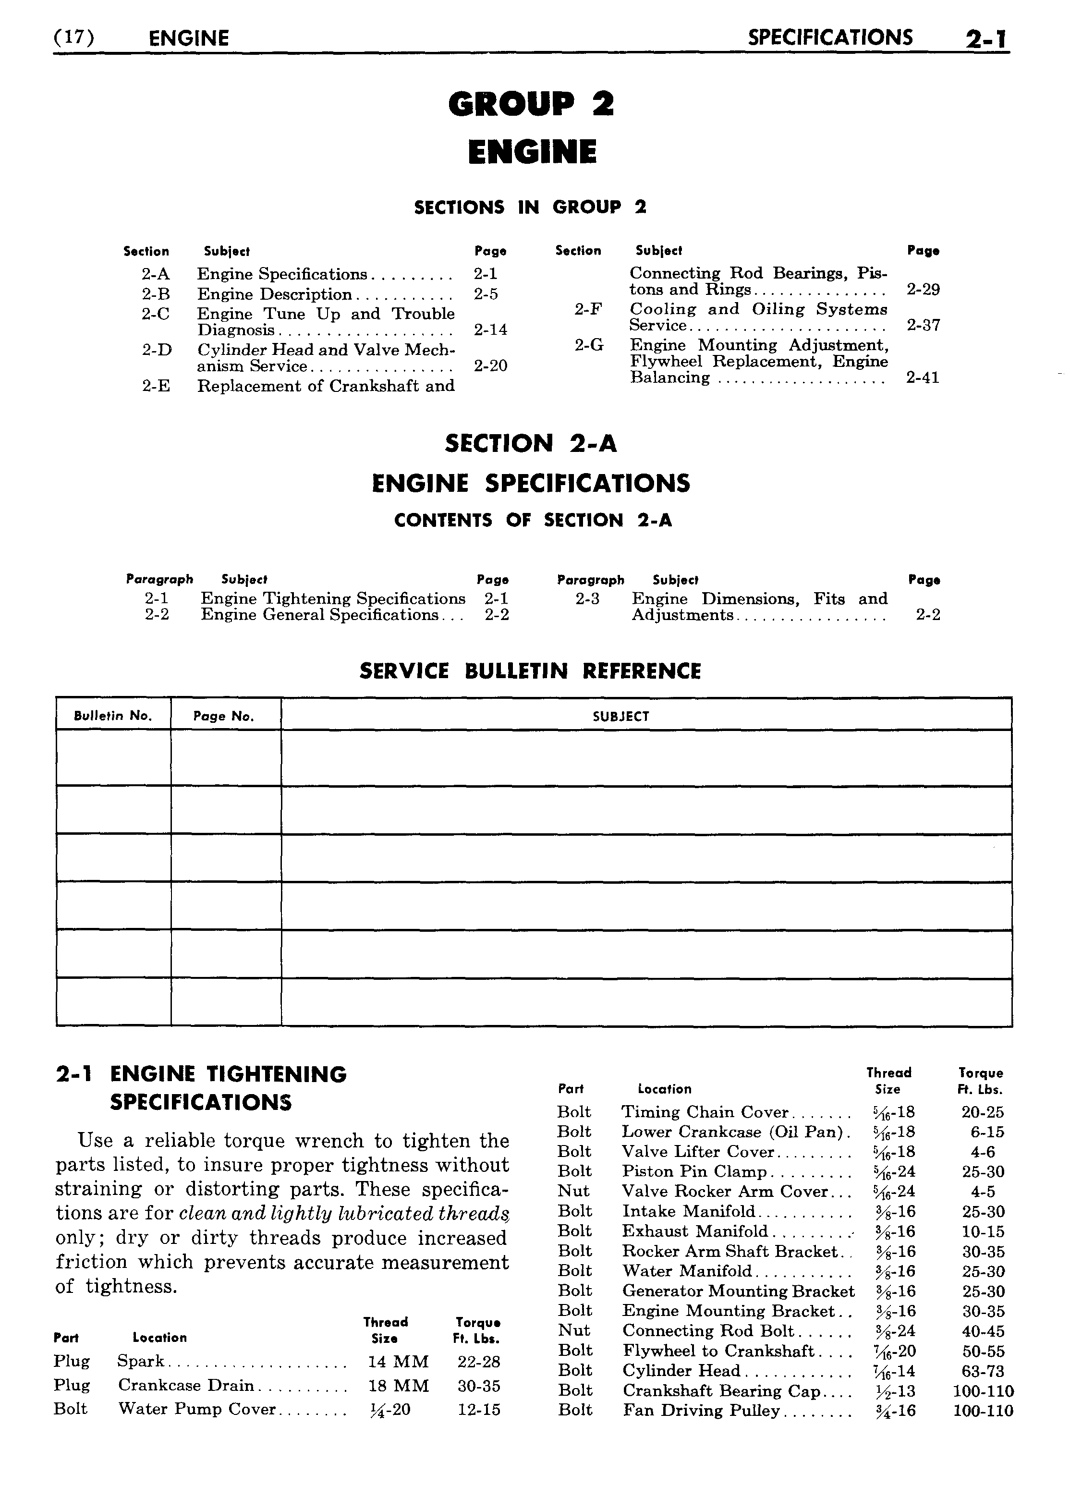 n_03 1954 Buick Shop Manual - Engine-001-001.jpg